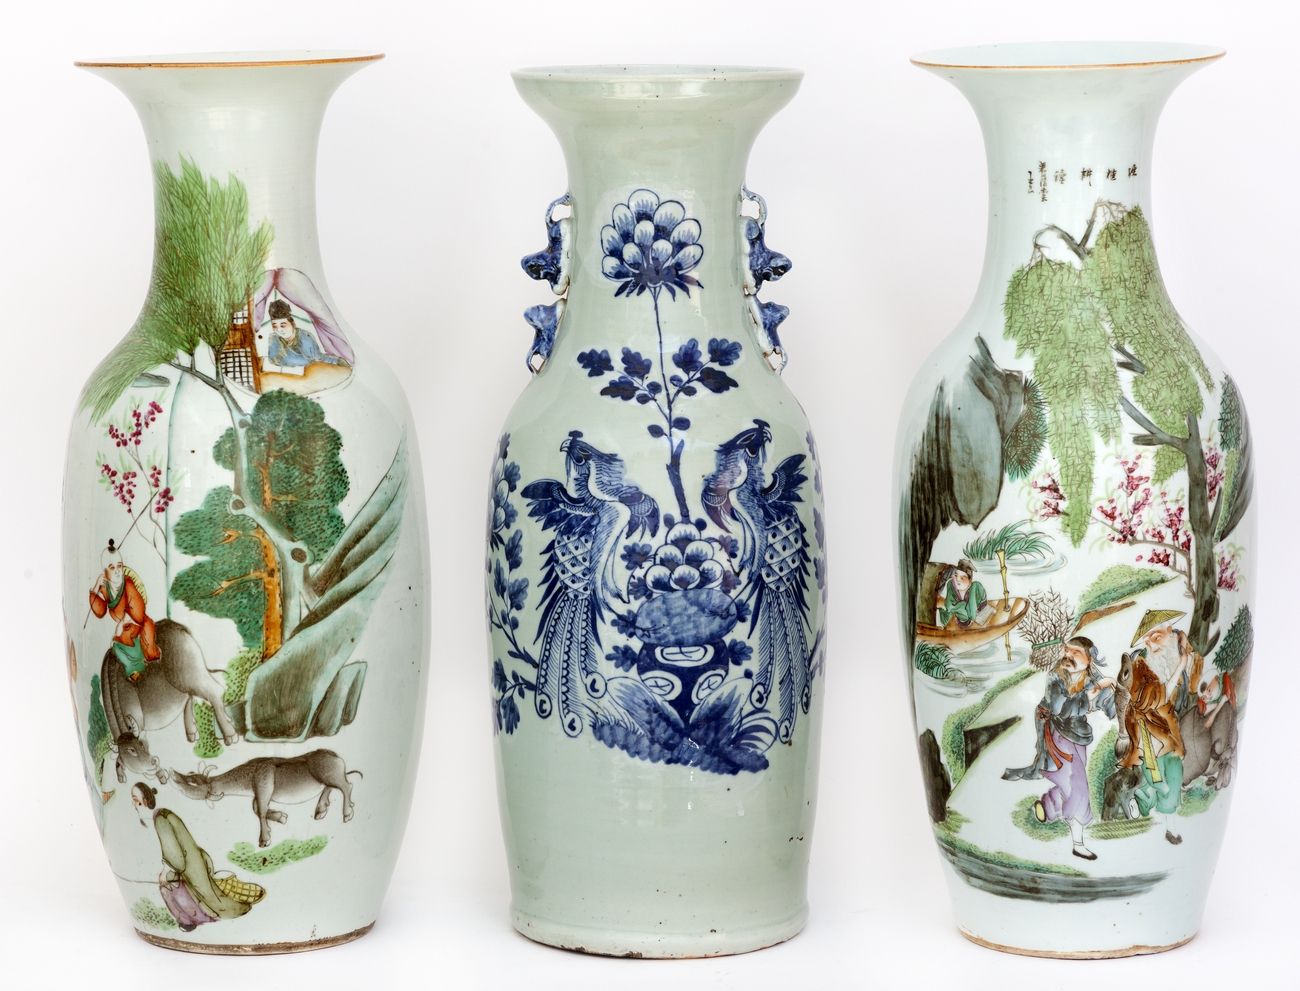 Null 中国，19-20世纪
拍品包括三个蓝白珐琅和钱江彩的各种装饰的瓷瓶。
高度：57厘米和58厘米